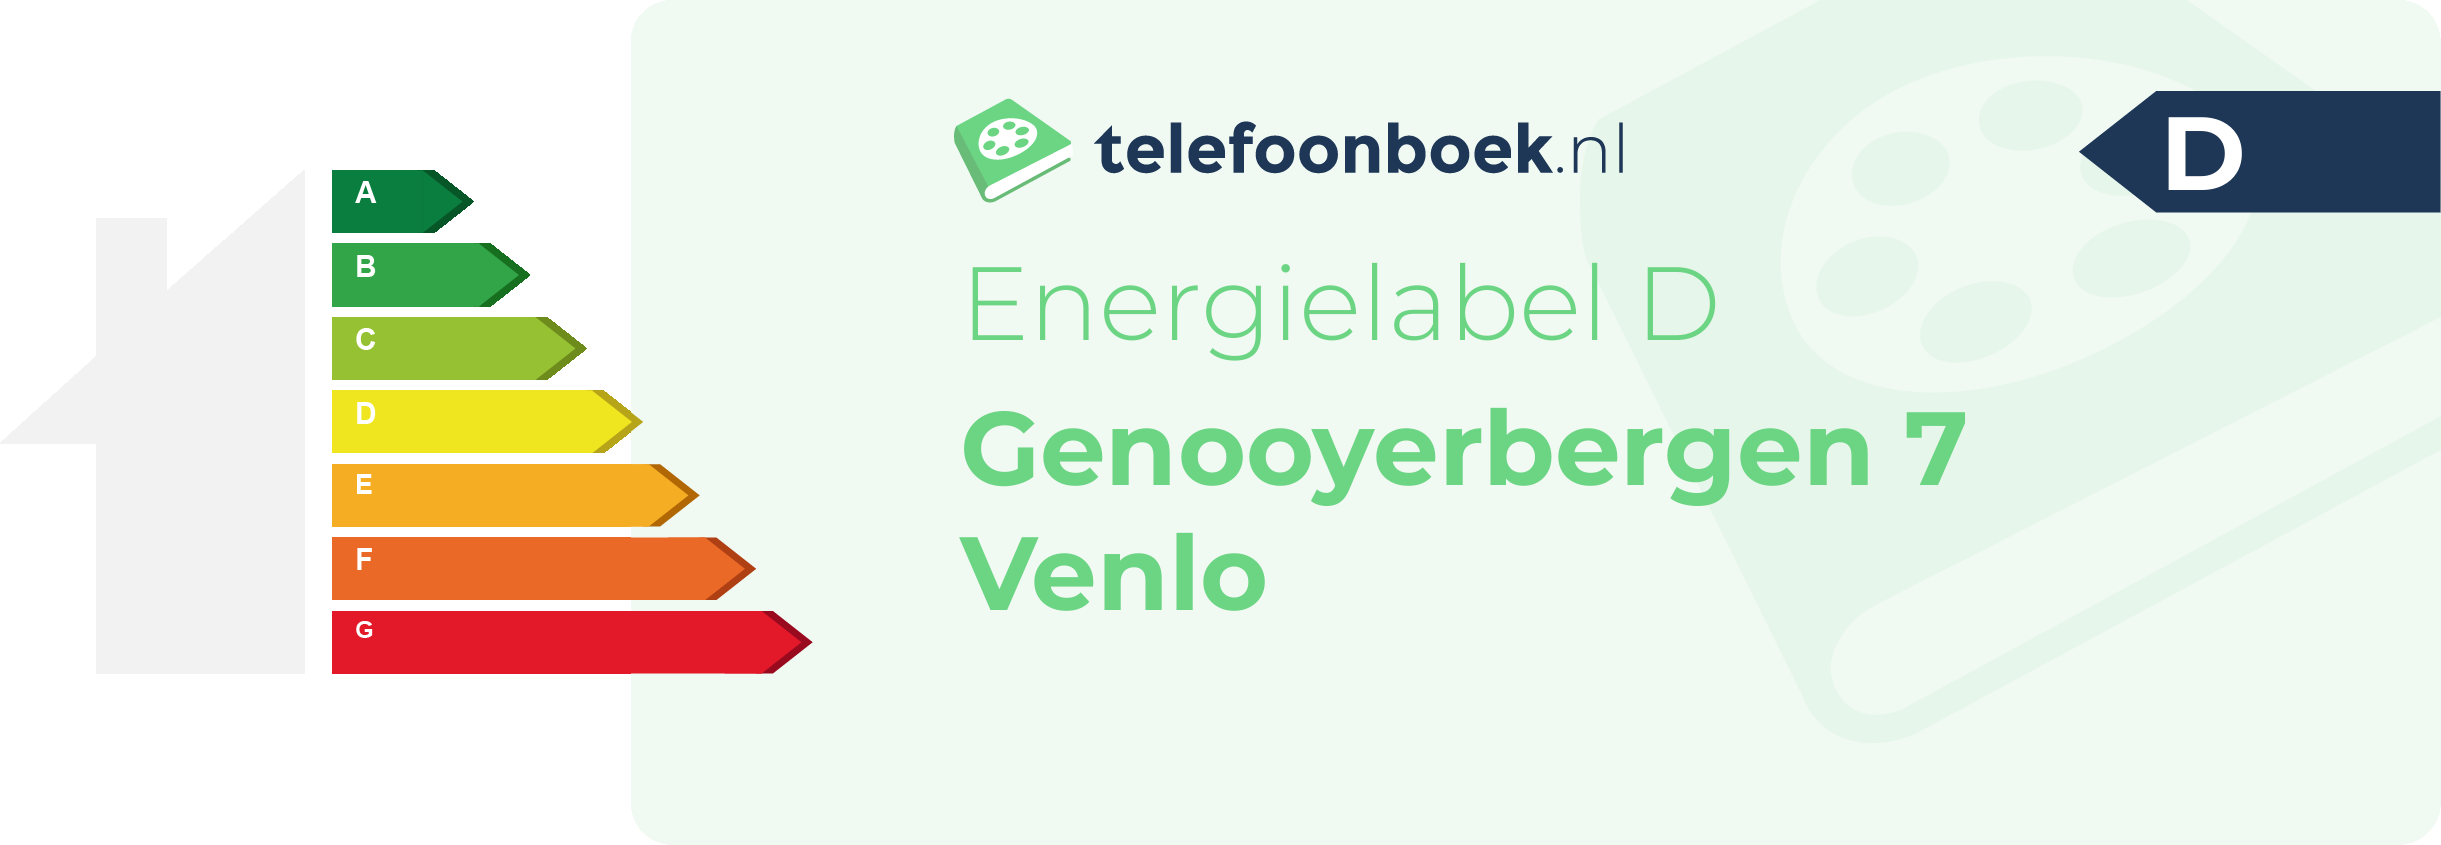 Energielabel Genooyerbergen 7 Venlo